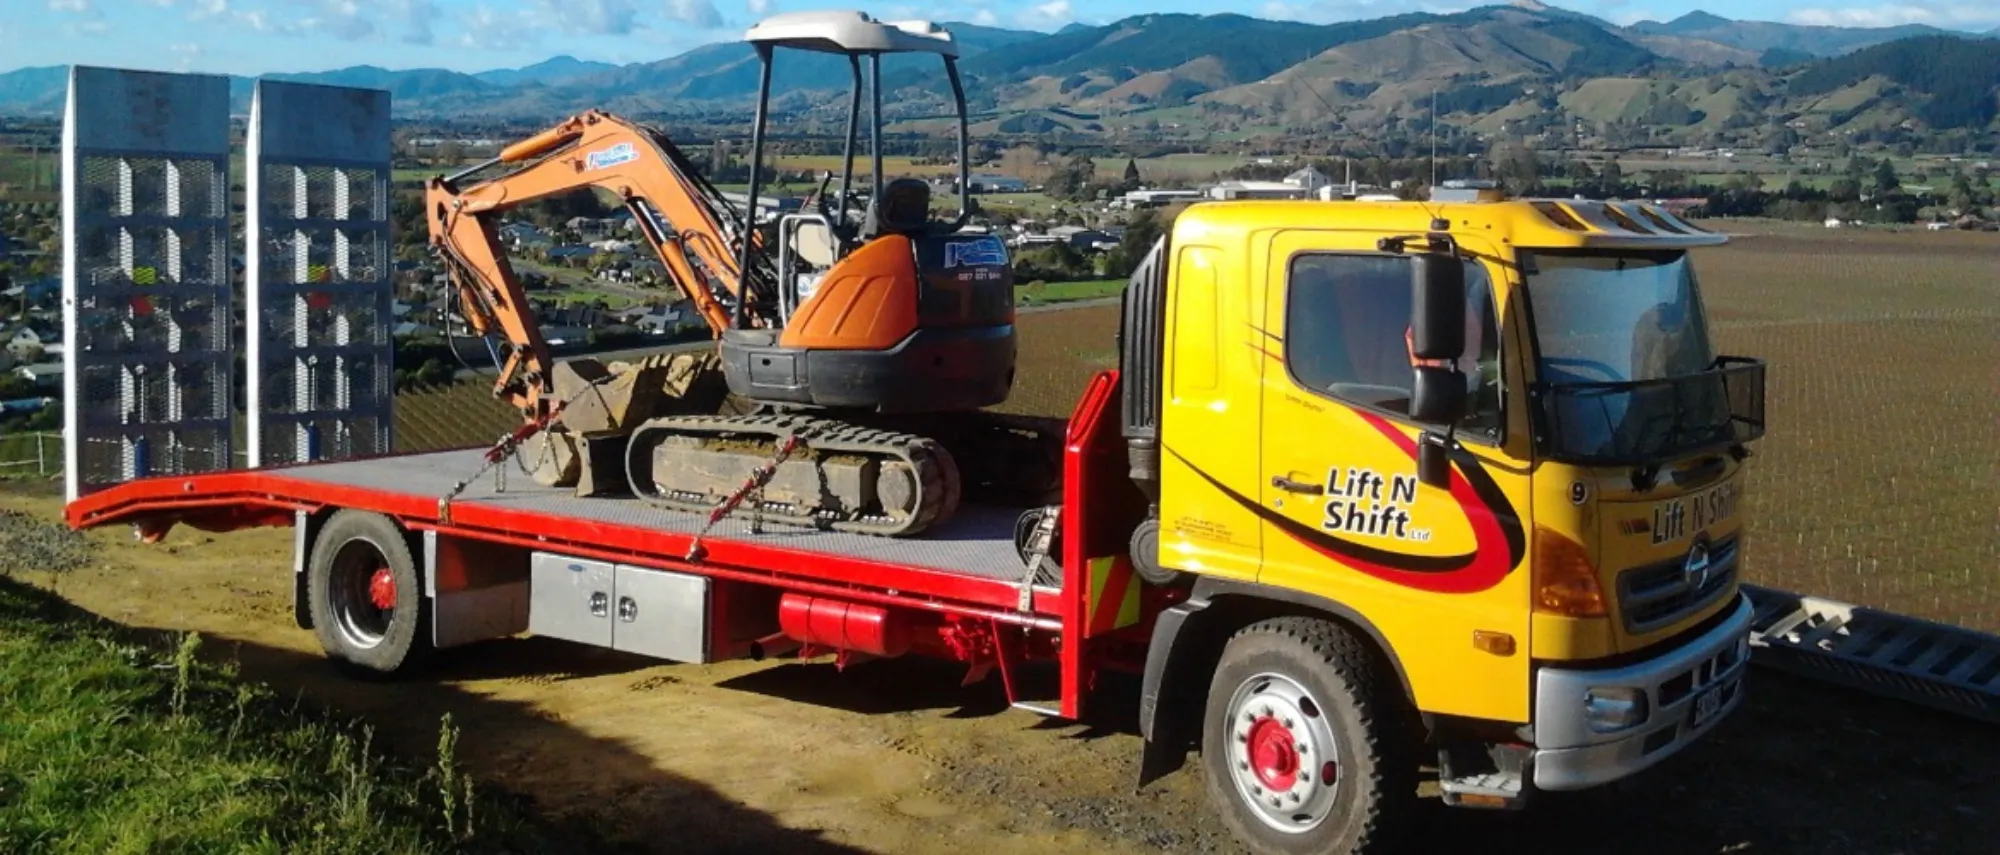 Lift N Shift - can move heavy equipment with ease - Nelson, Blenheim, Marlborough, West Coast, Motueka, Takaka, Golden Bay and New Zealand